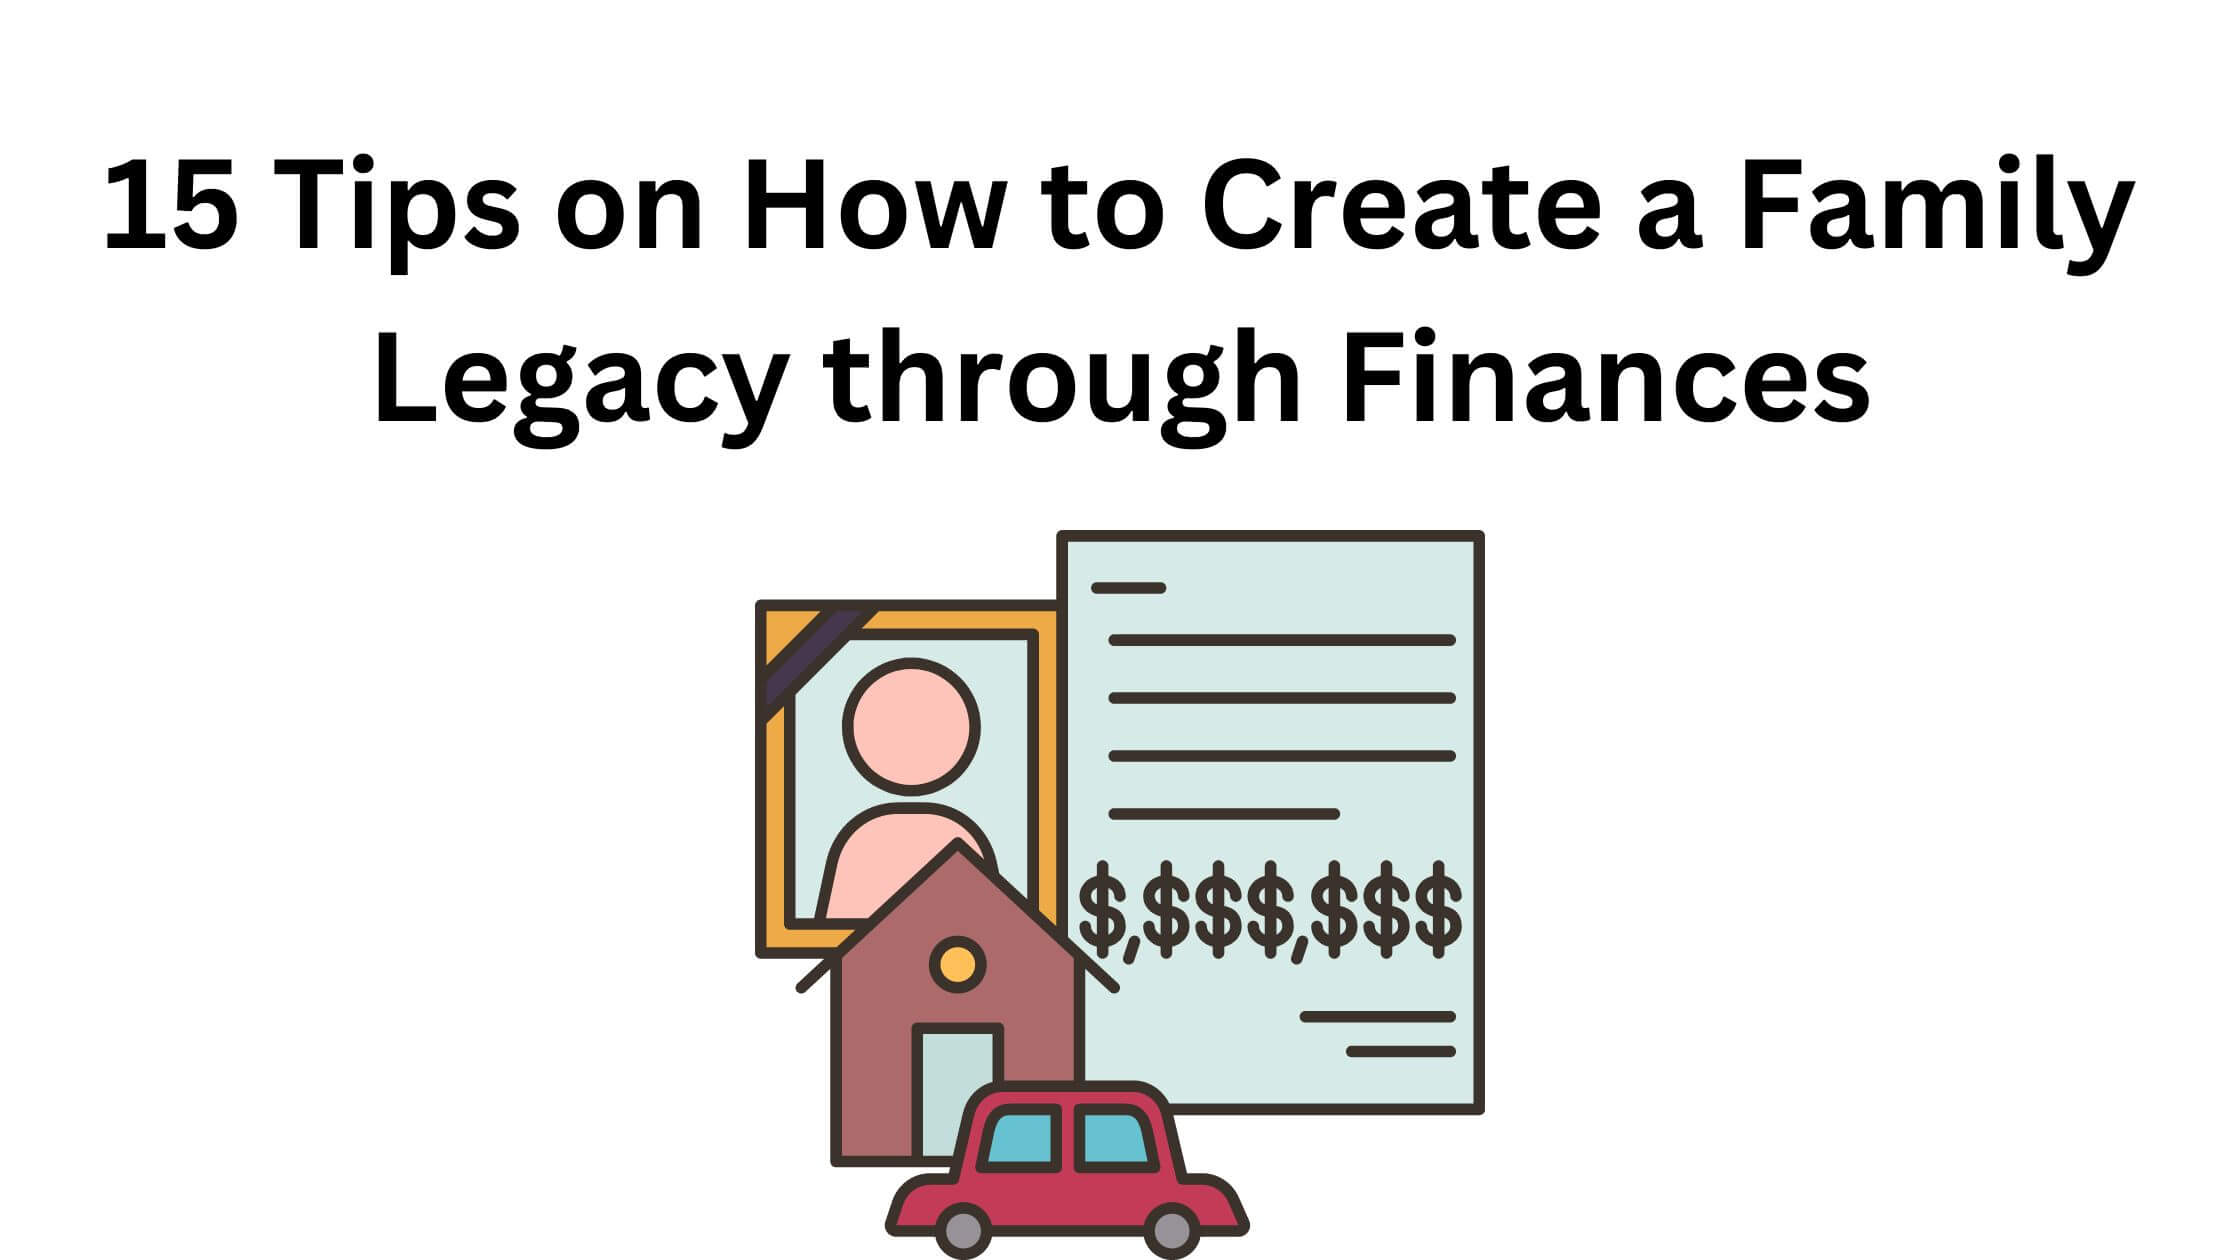 Strategies to create a family legacy through finances